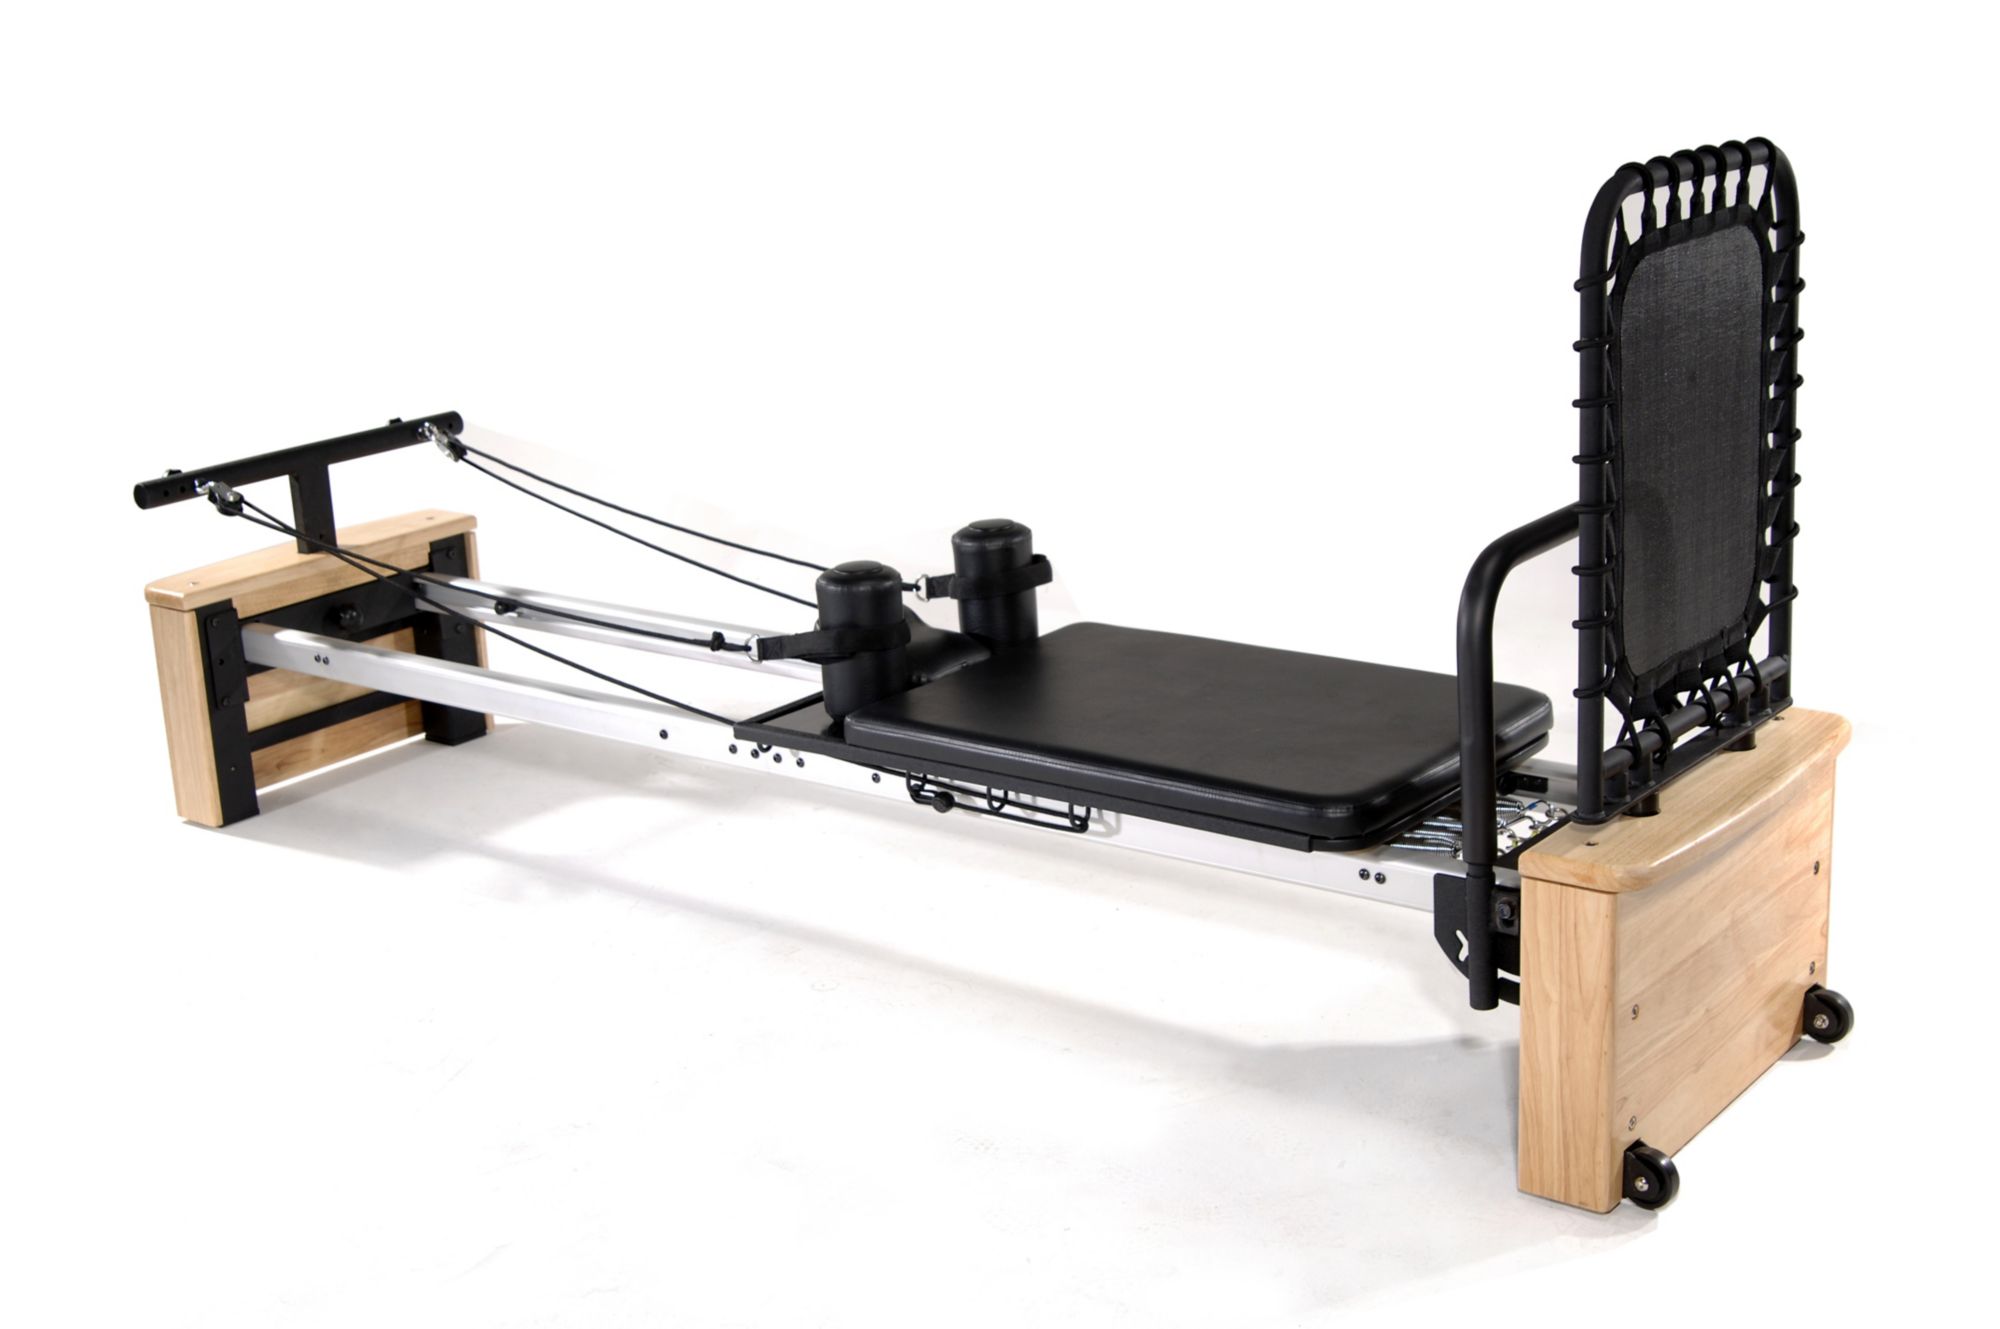 Aero Pilates Reformer Plus - sporting goods - by owner - sale - craigslist